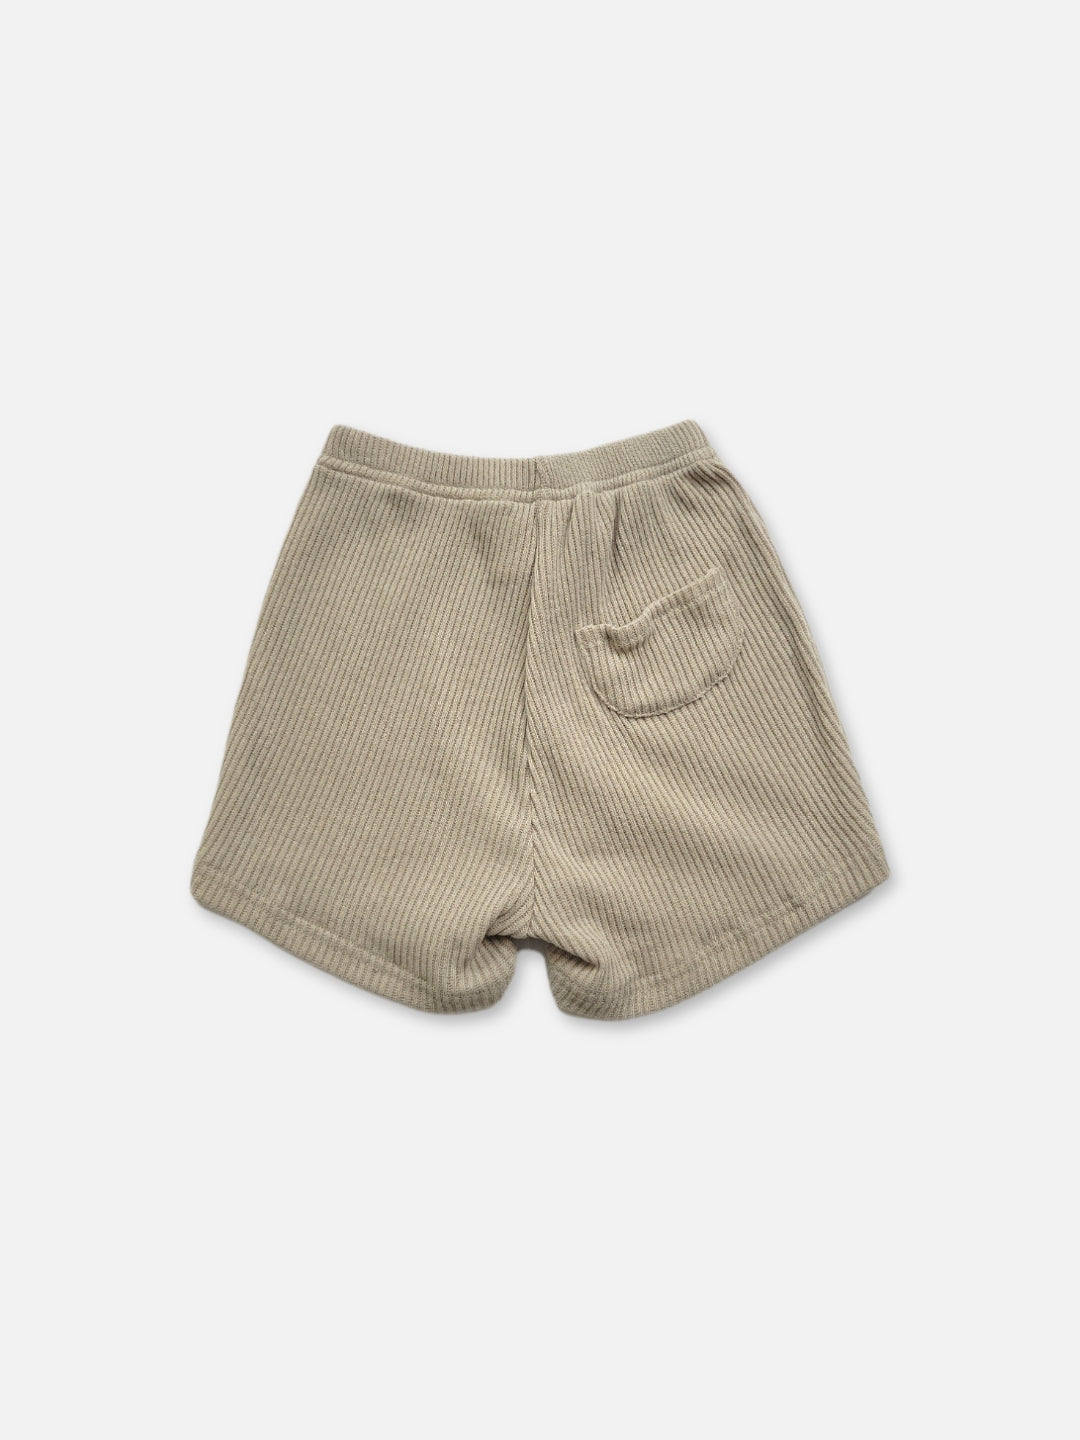 General Neutral Kids Churros Shorts | Oatmeal